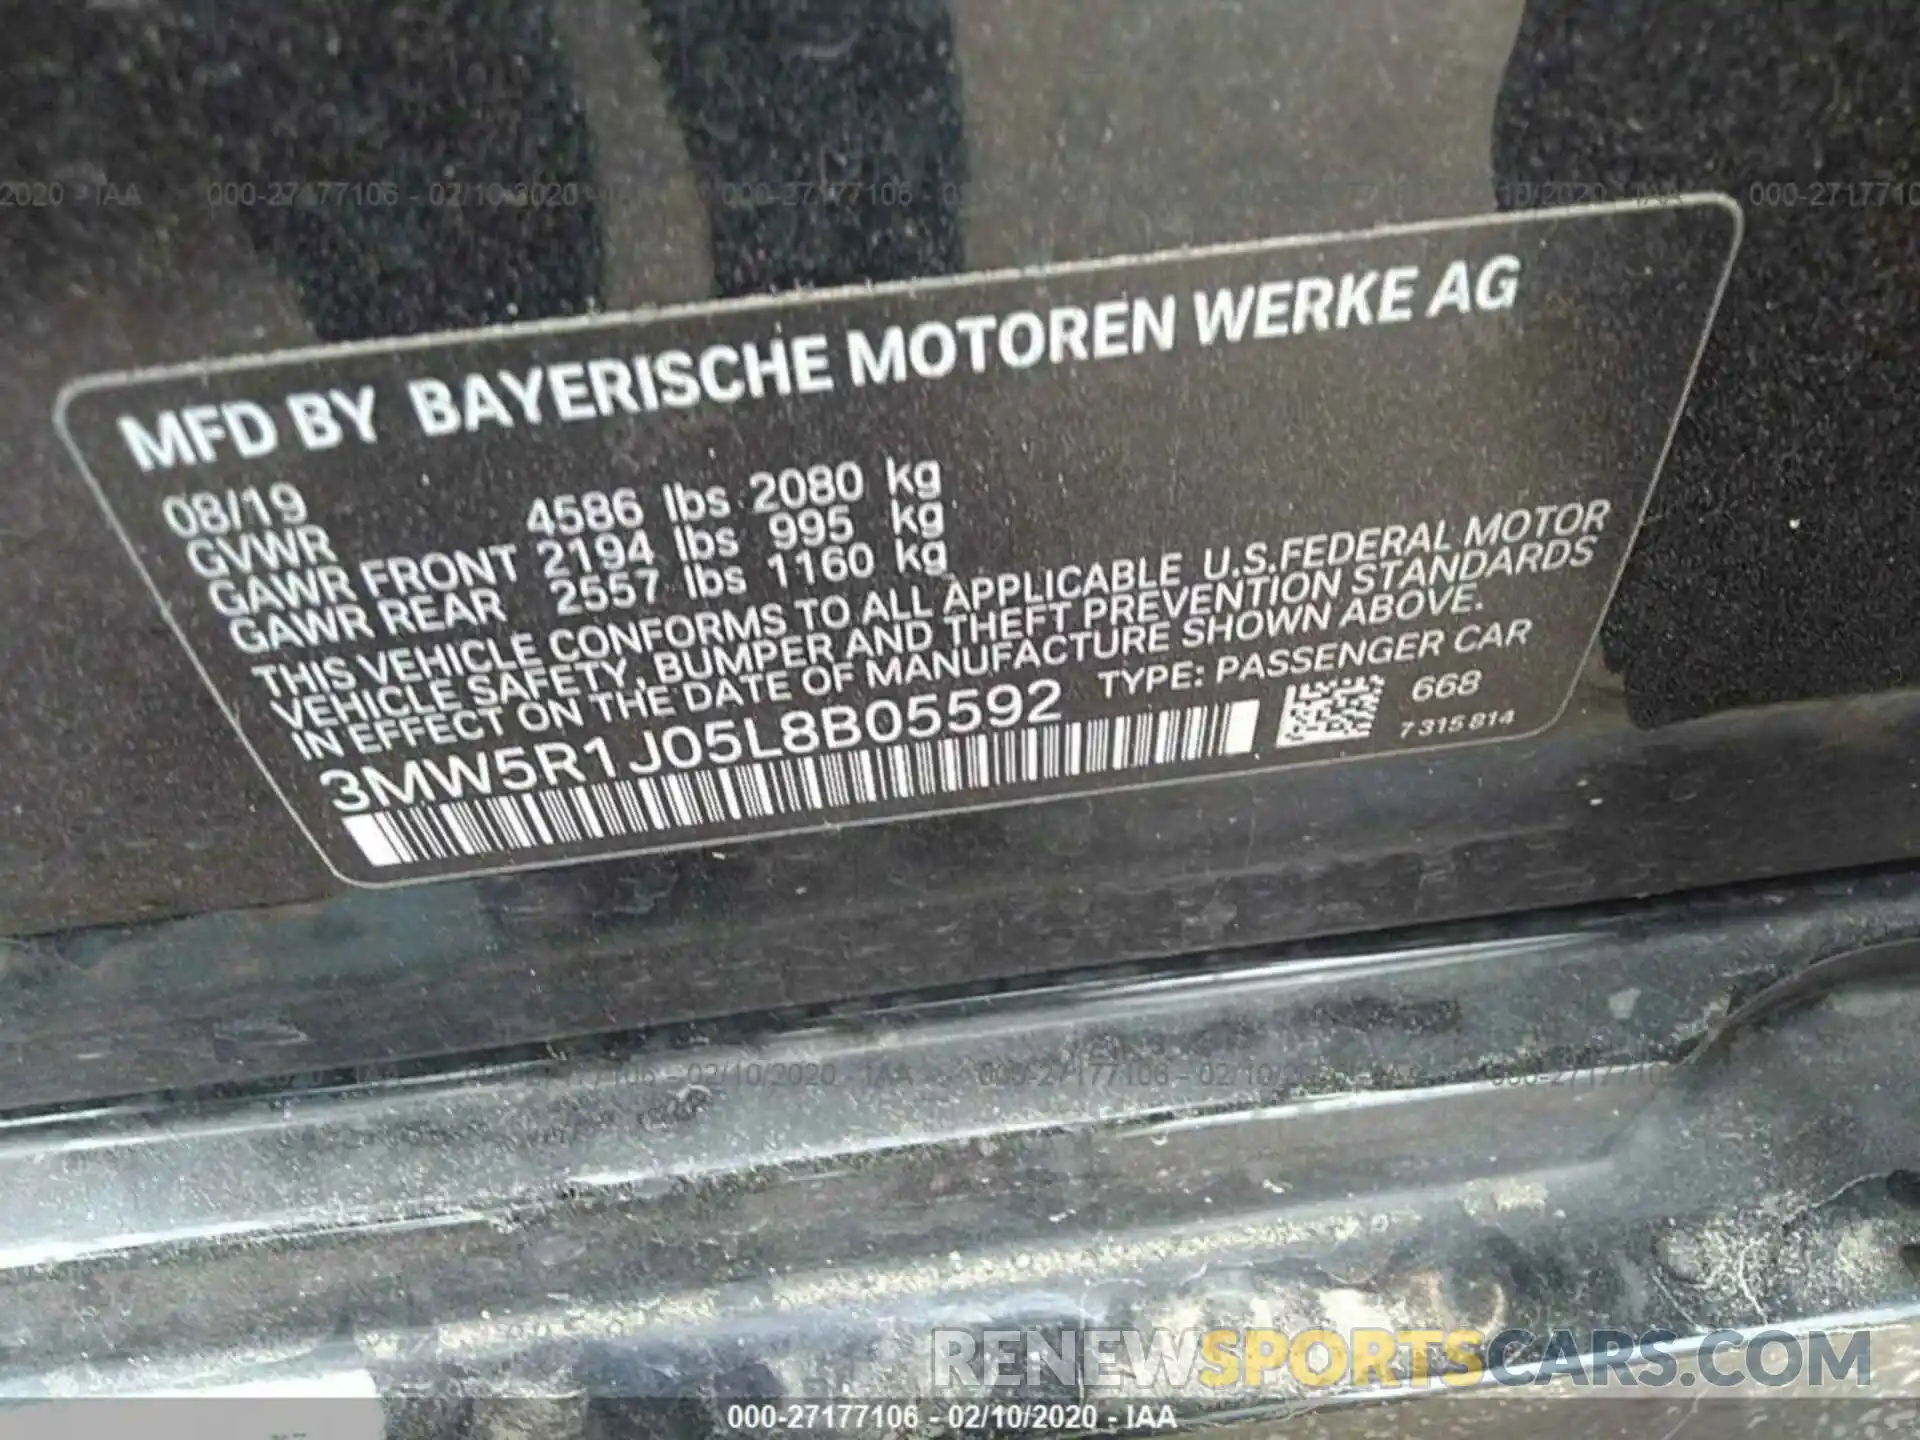 9 Photograph of a damaged car 3MW5R1J05L8B05592 BMW 330I 2020